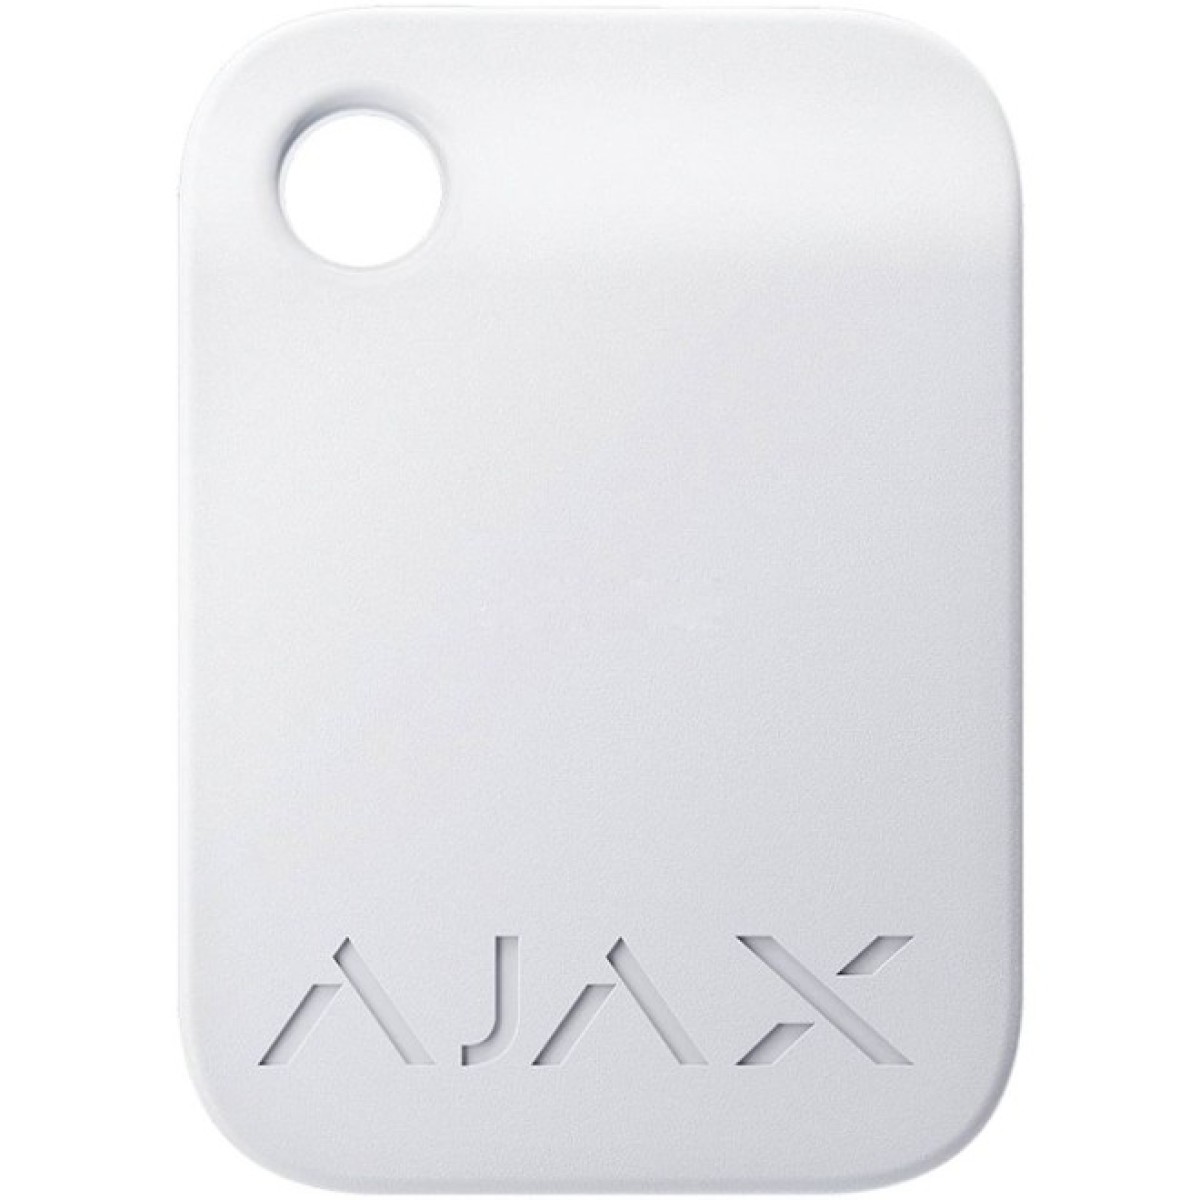 Брелок для охранной системы Ajax Tag White /10 256_256.jpg